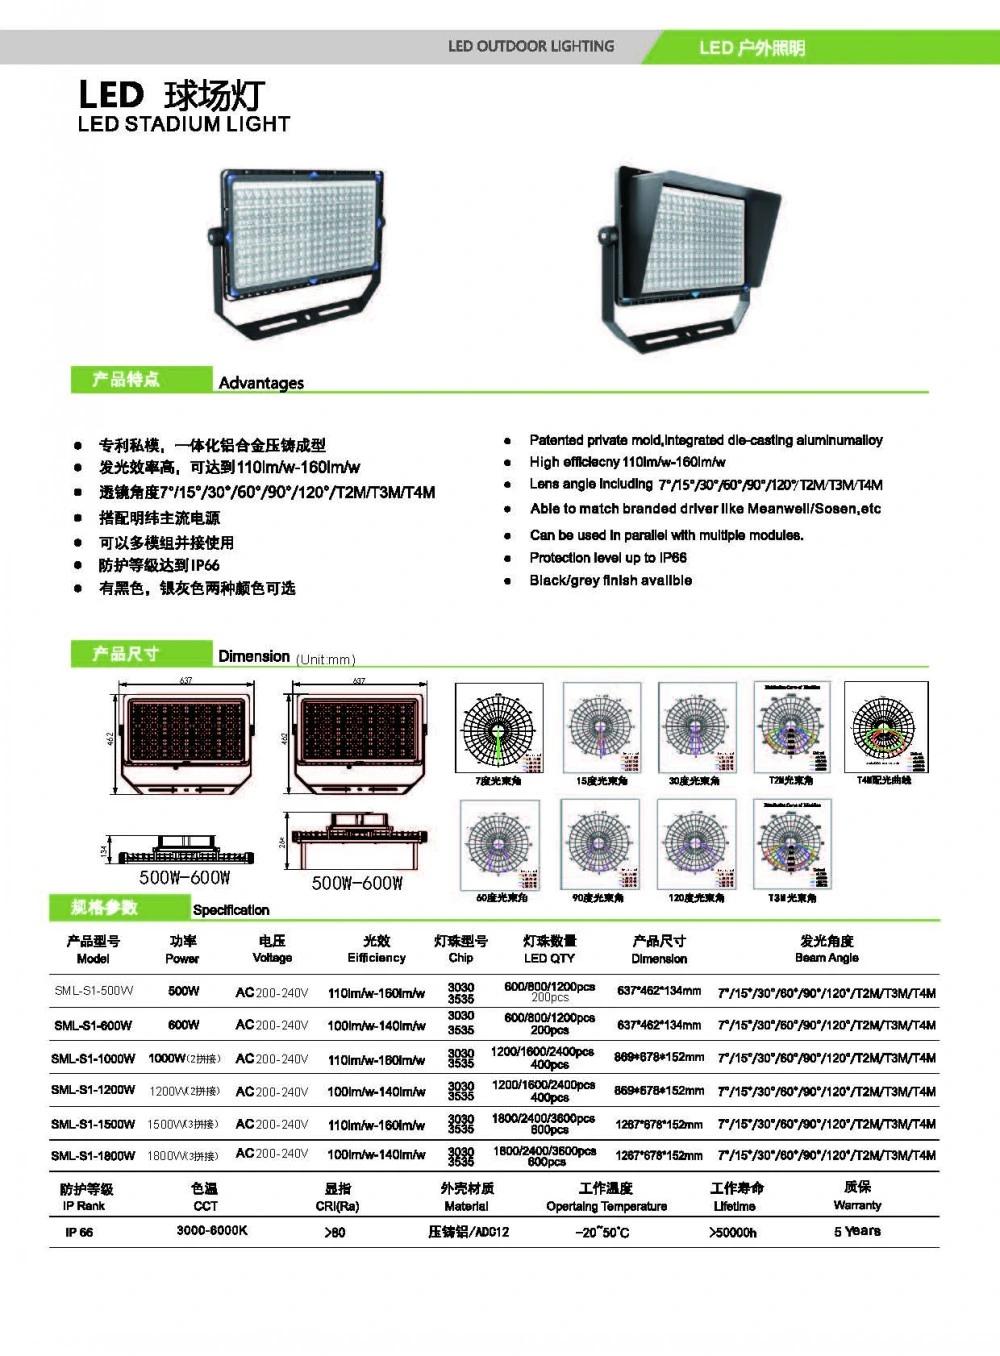 Shenzhen Manufacturer of 400W LED Flood Lighting for High Mast Applications